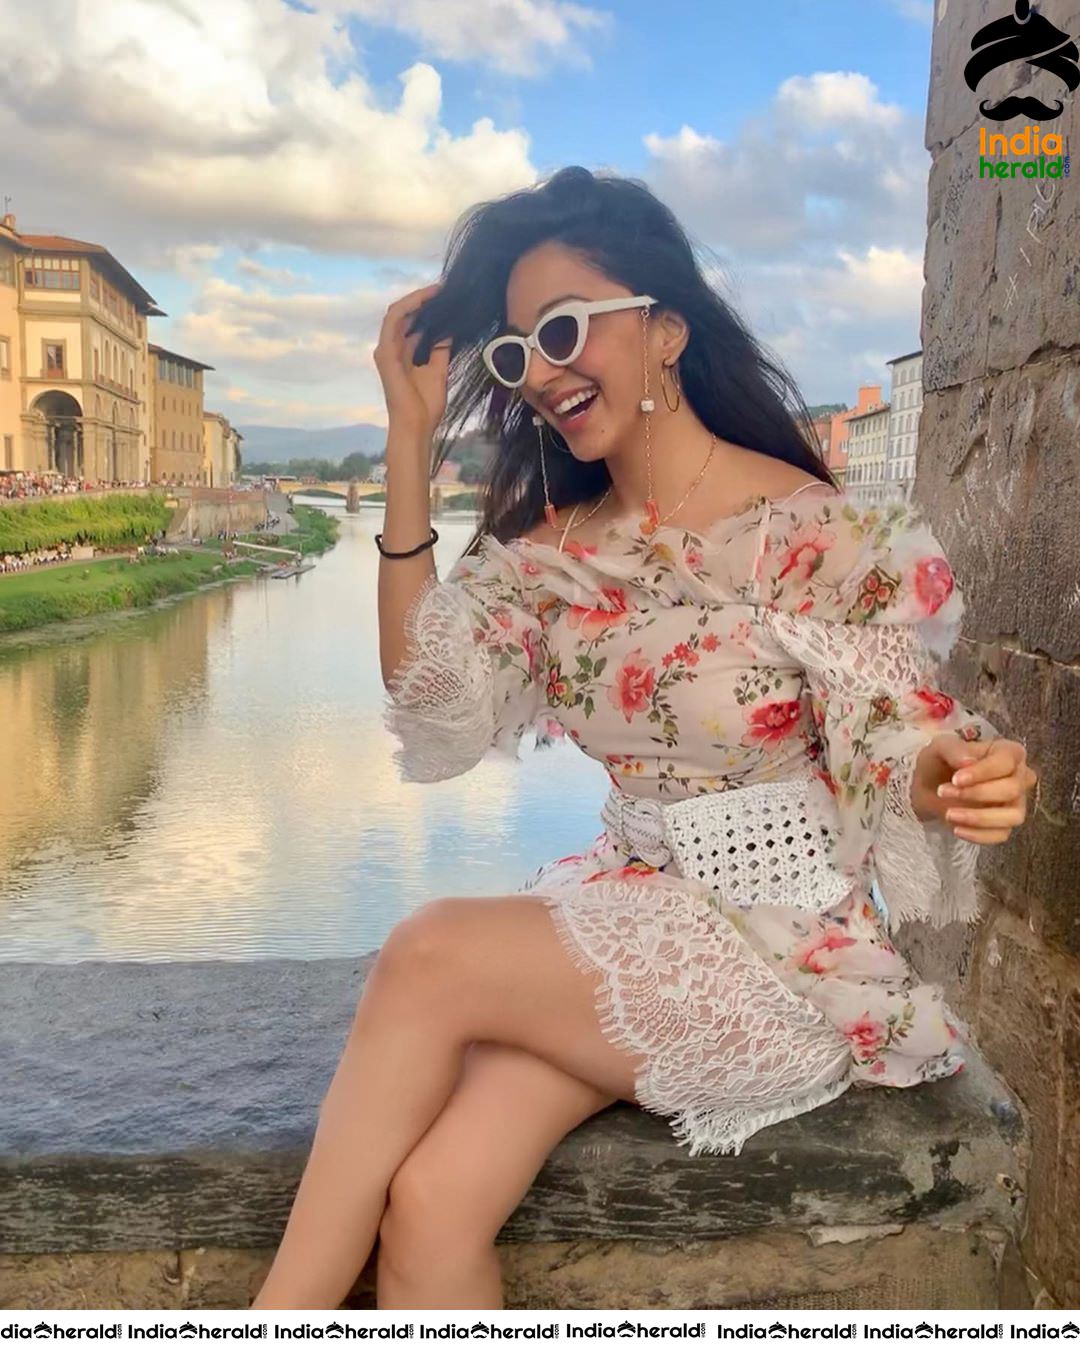 Kiara Advani Looking Hot during her vacation to Italy